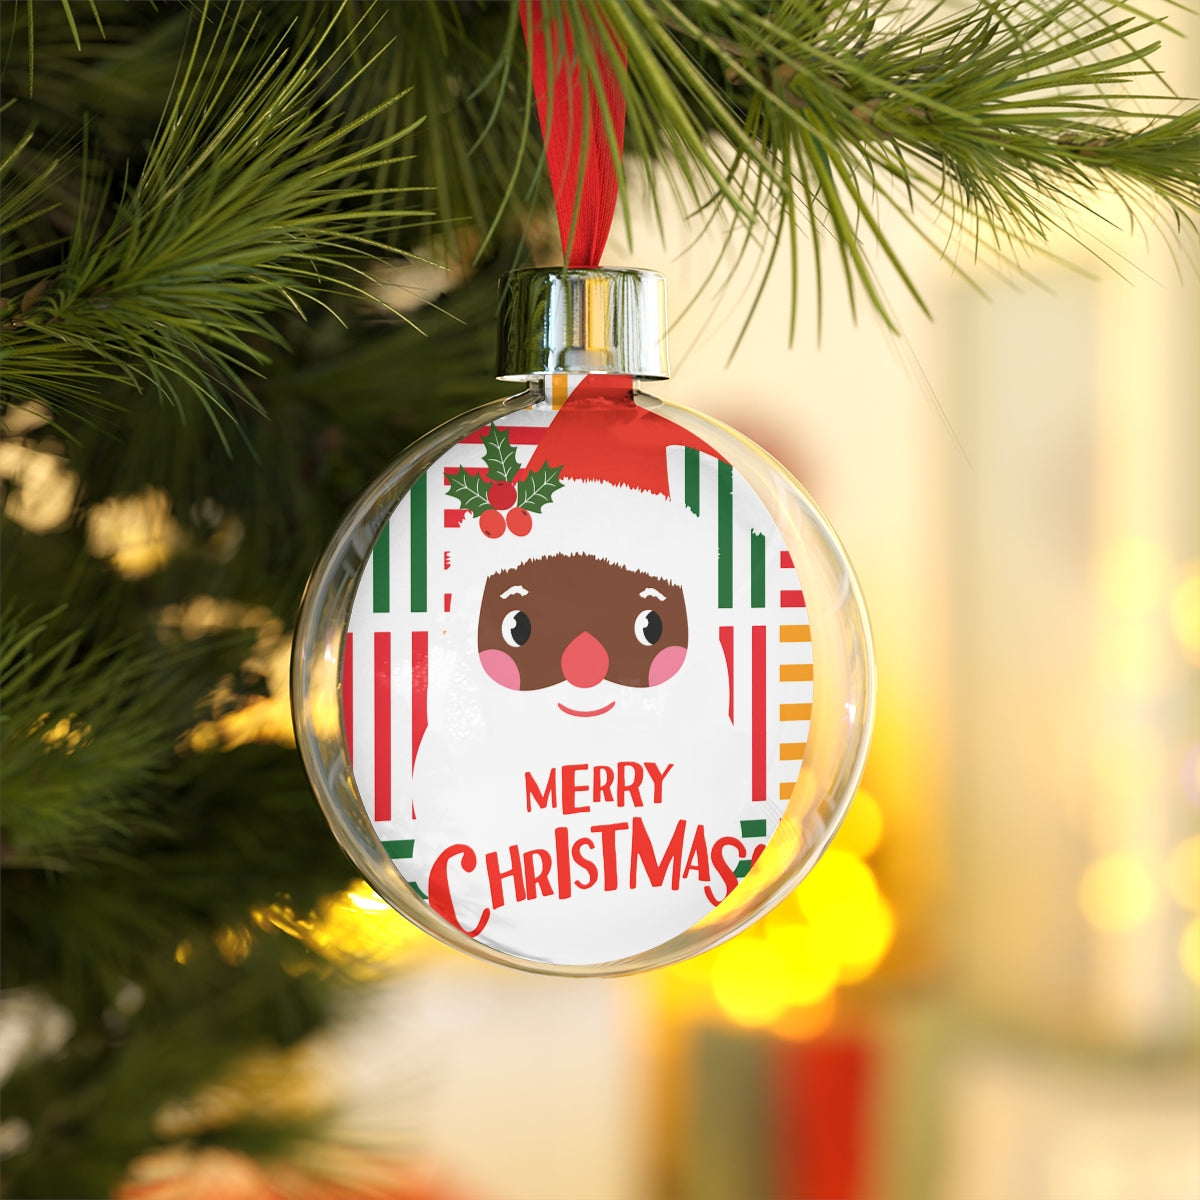 Black Santa Claus Round Christmas Ornament